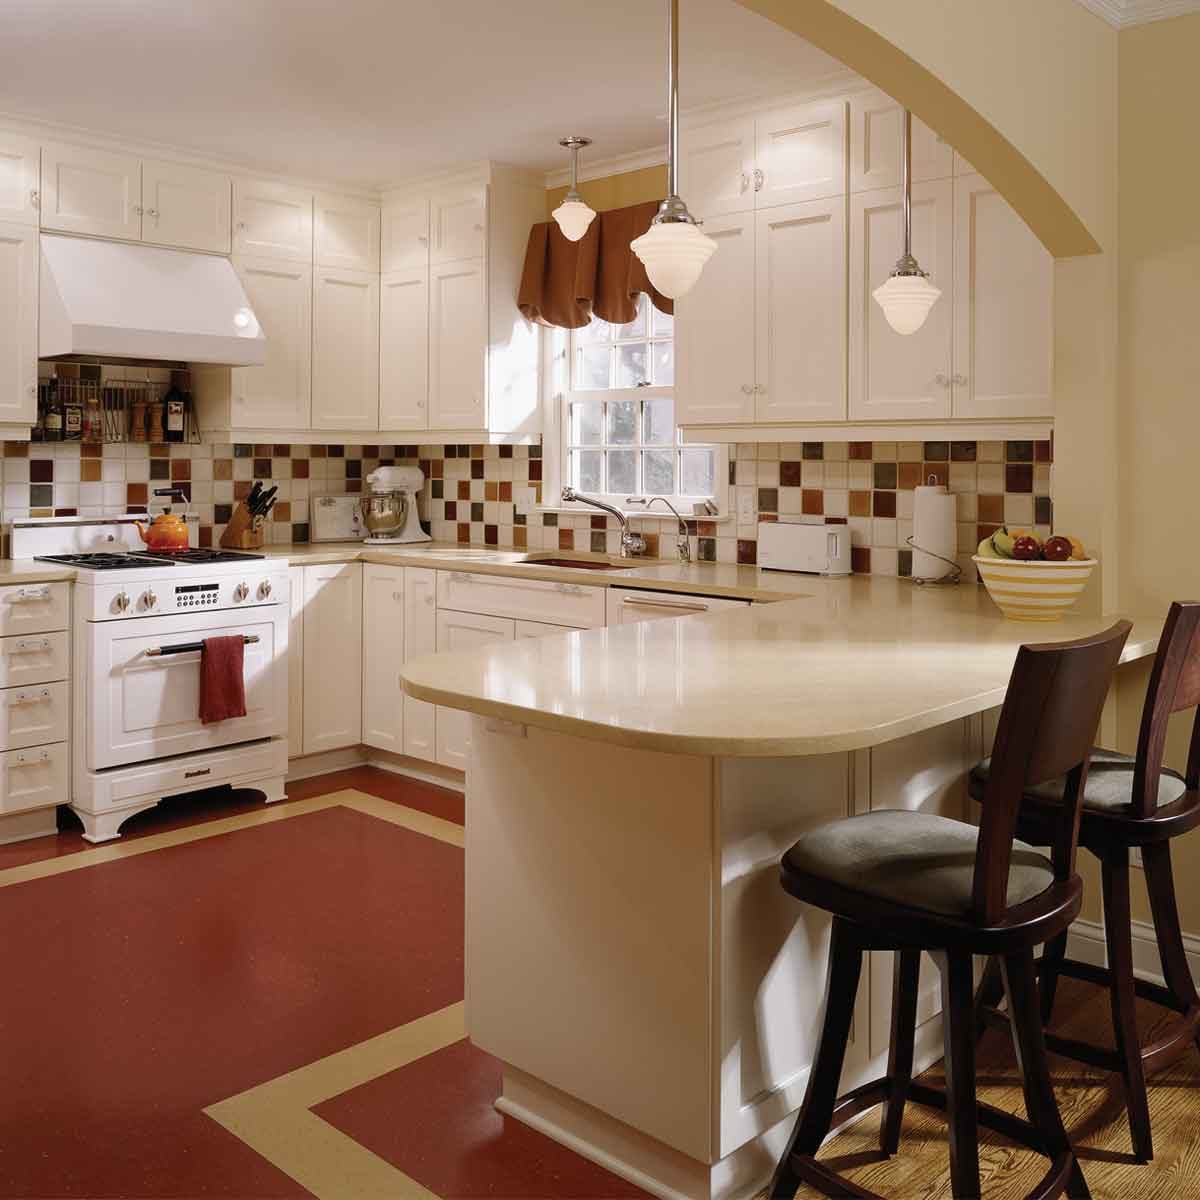 10 Small Kitchen Ideas To Maximize Space The Family Handyman